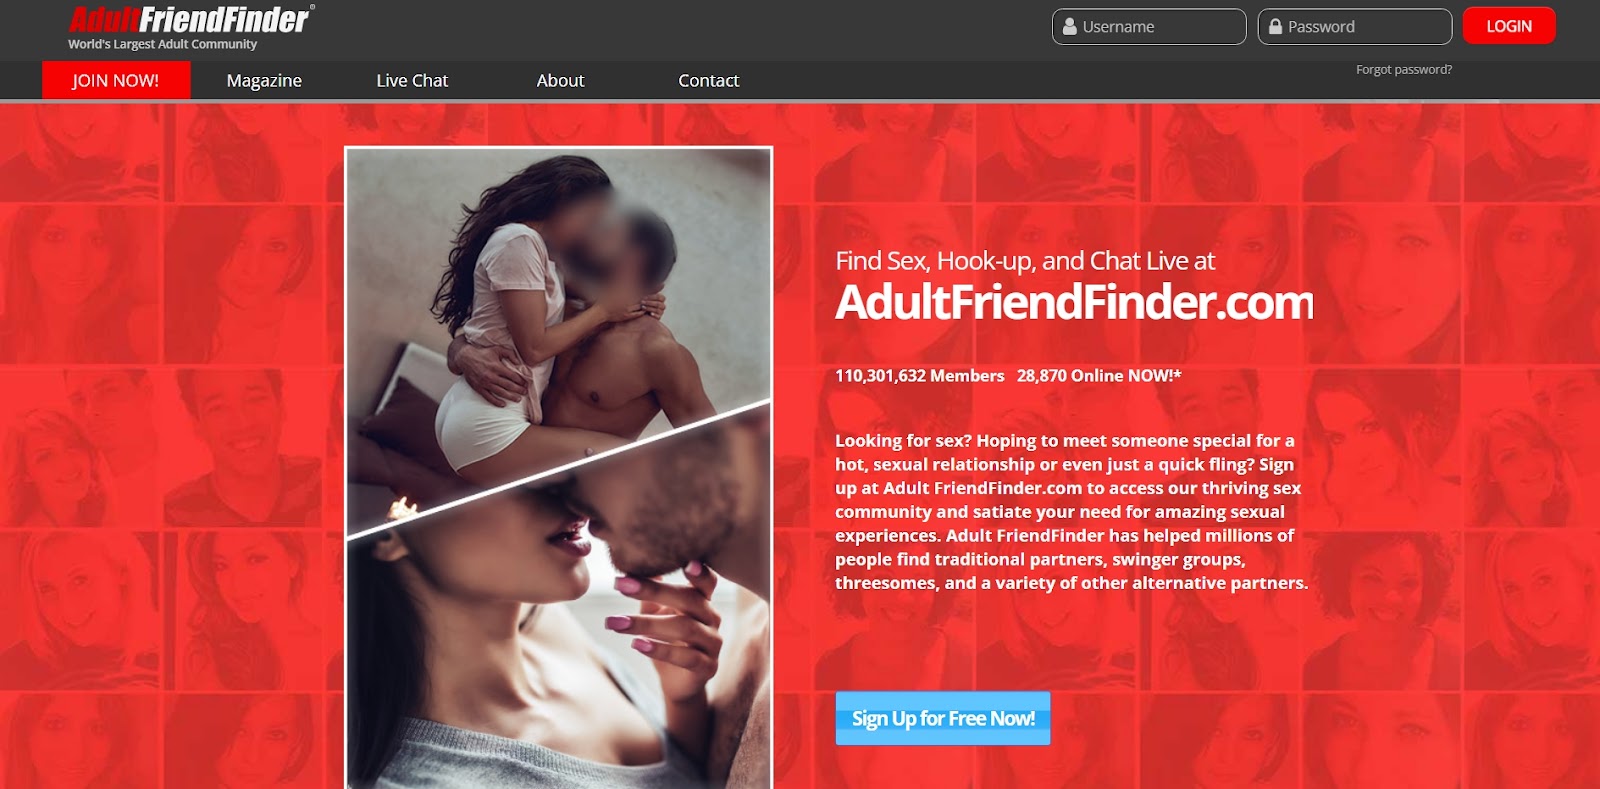 AdultFriendFinder – Best for Casual Hookups